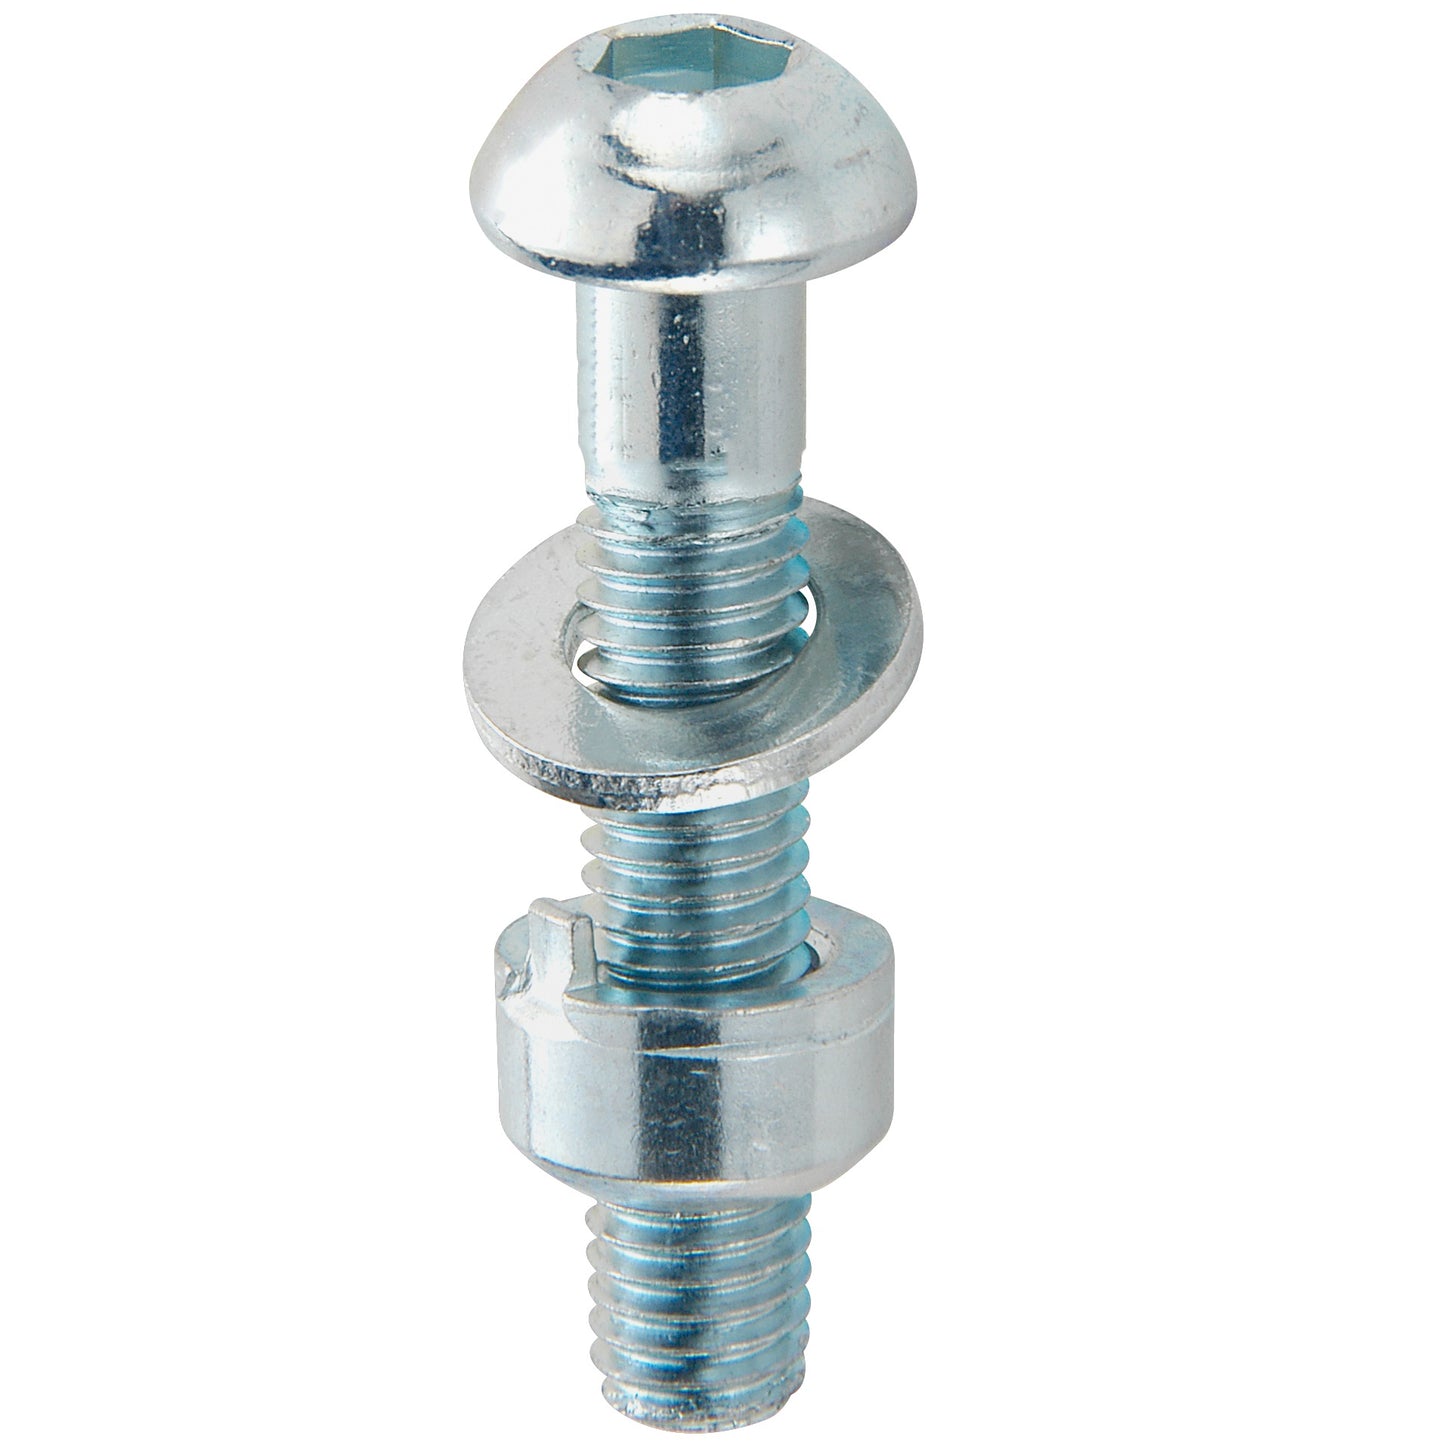 Hexagon socket clamping bolt M 8 x 32 mm set, galvanized steel